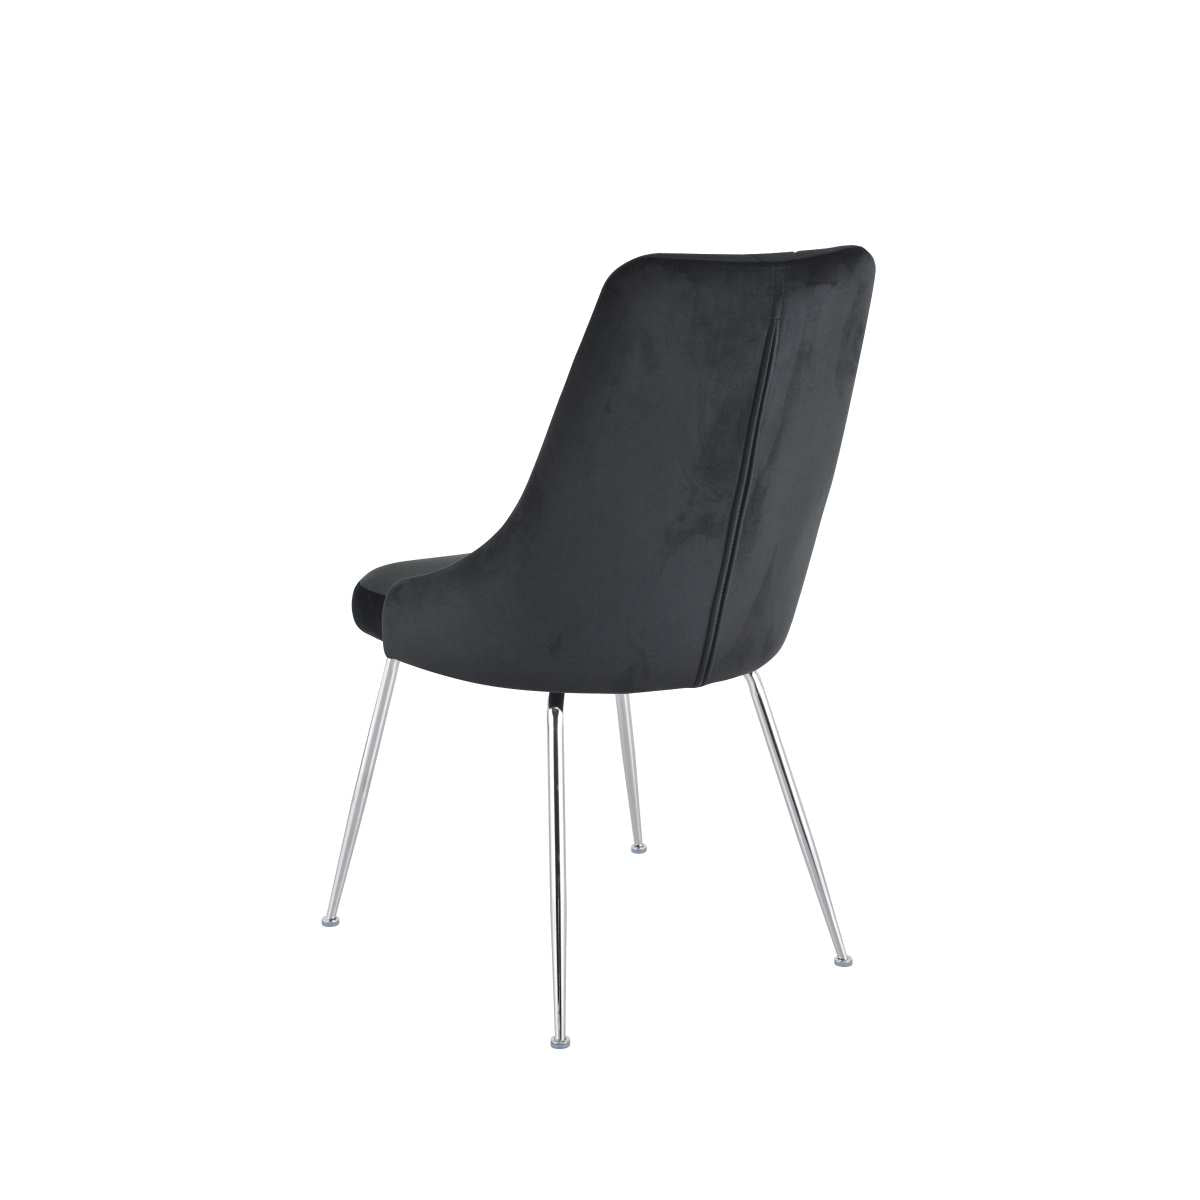 Plumeria Chairs Set Of 2 Black With Chrome Legs 1321